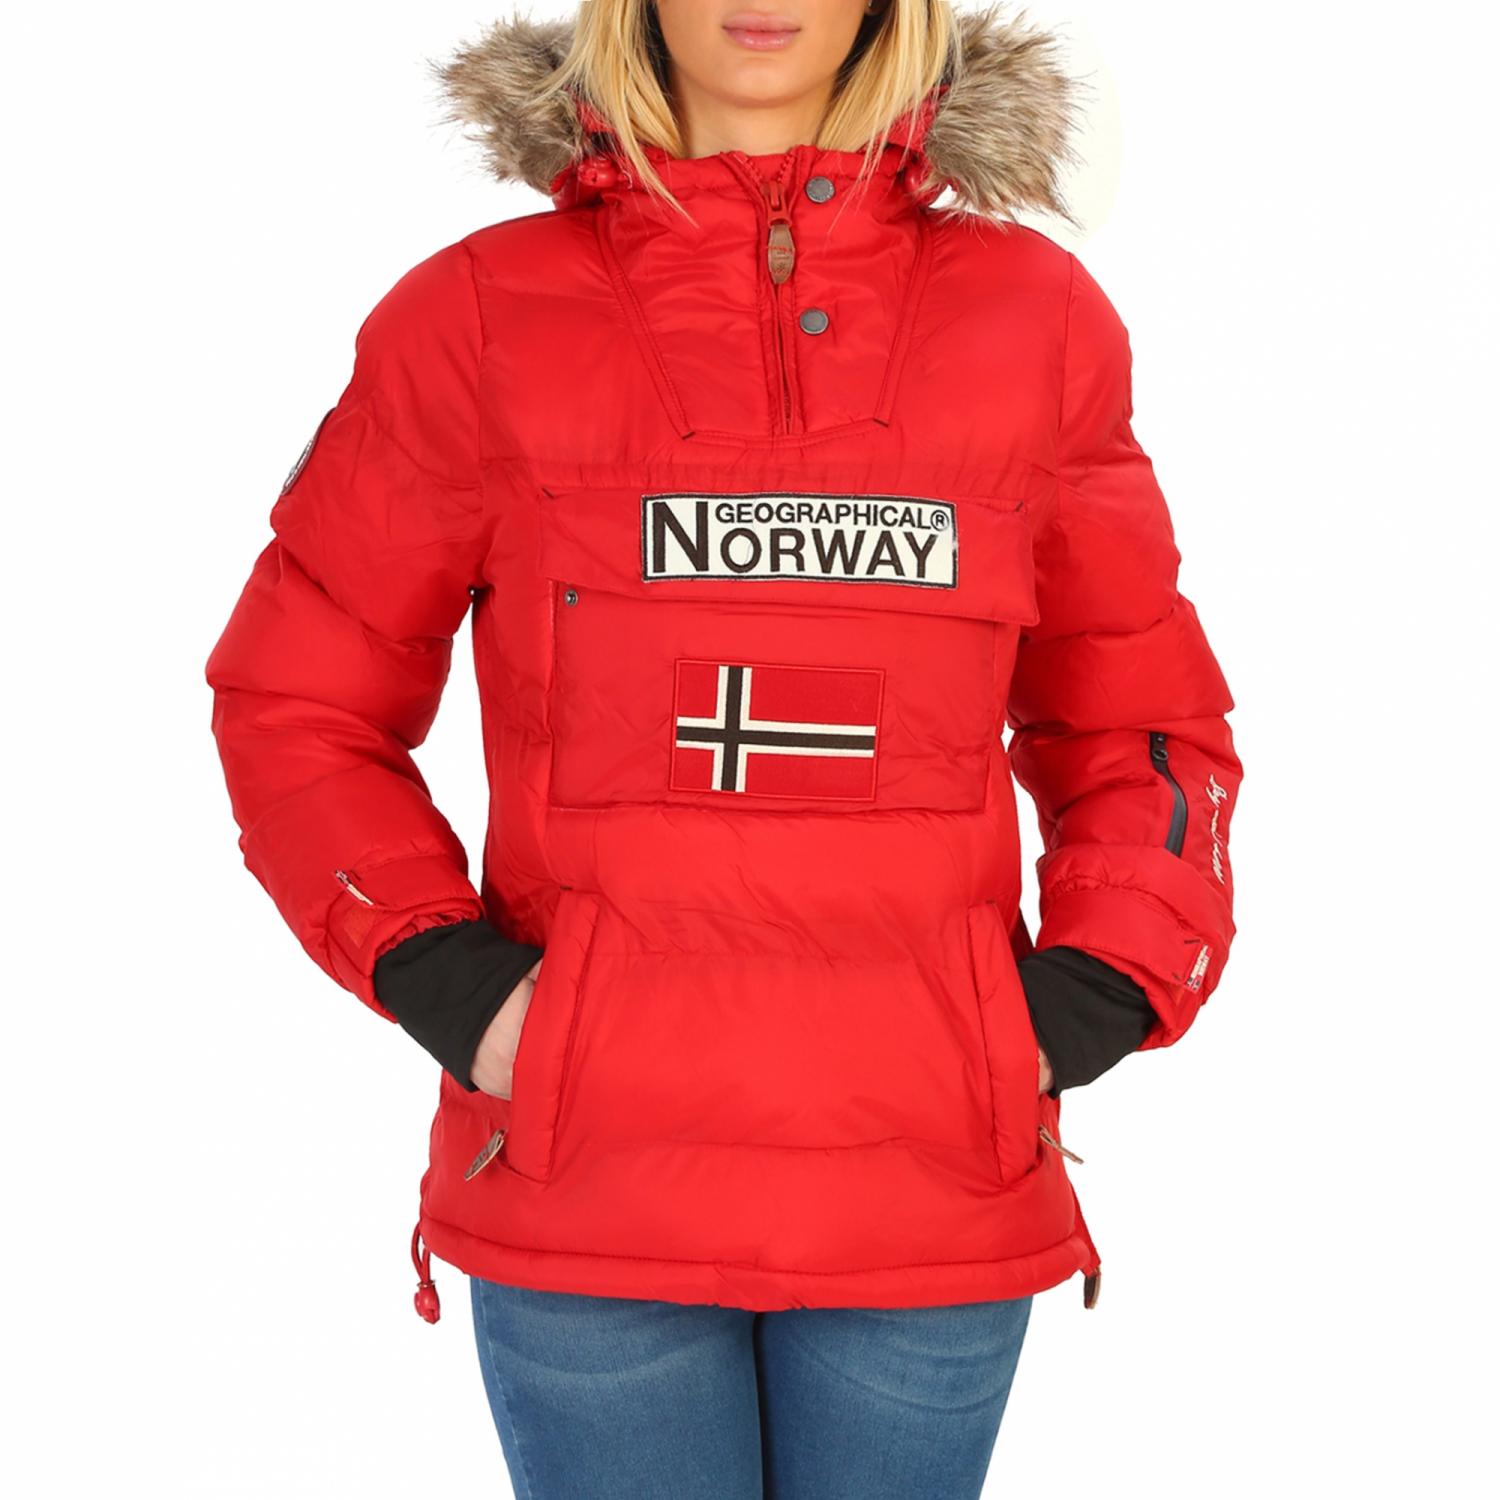 Chaqueta De Geographical Norway | anson.woman.red - Modabar: Ropa De Marca Barata Online